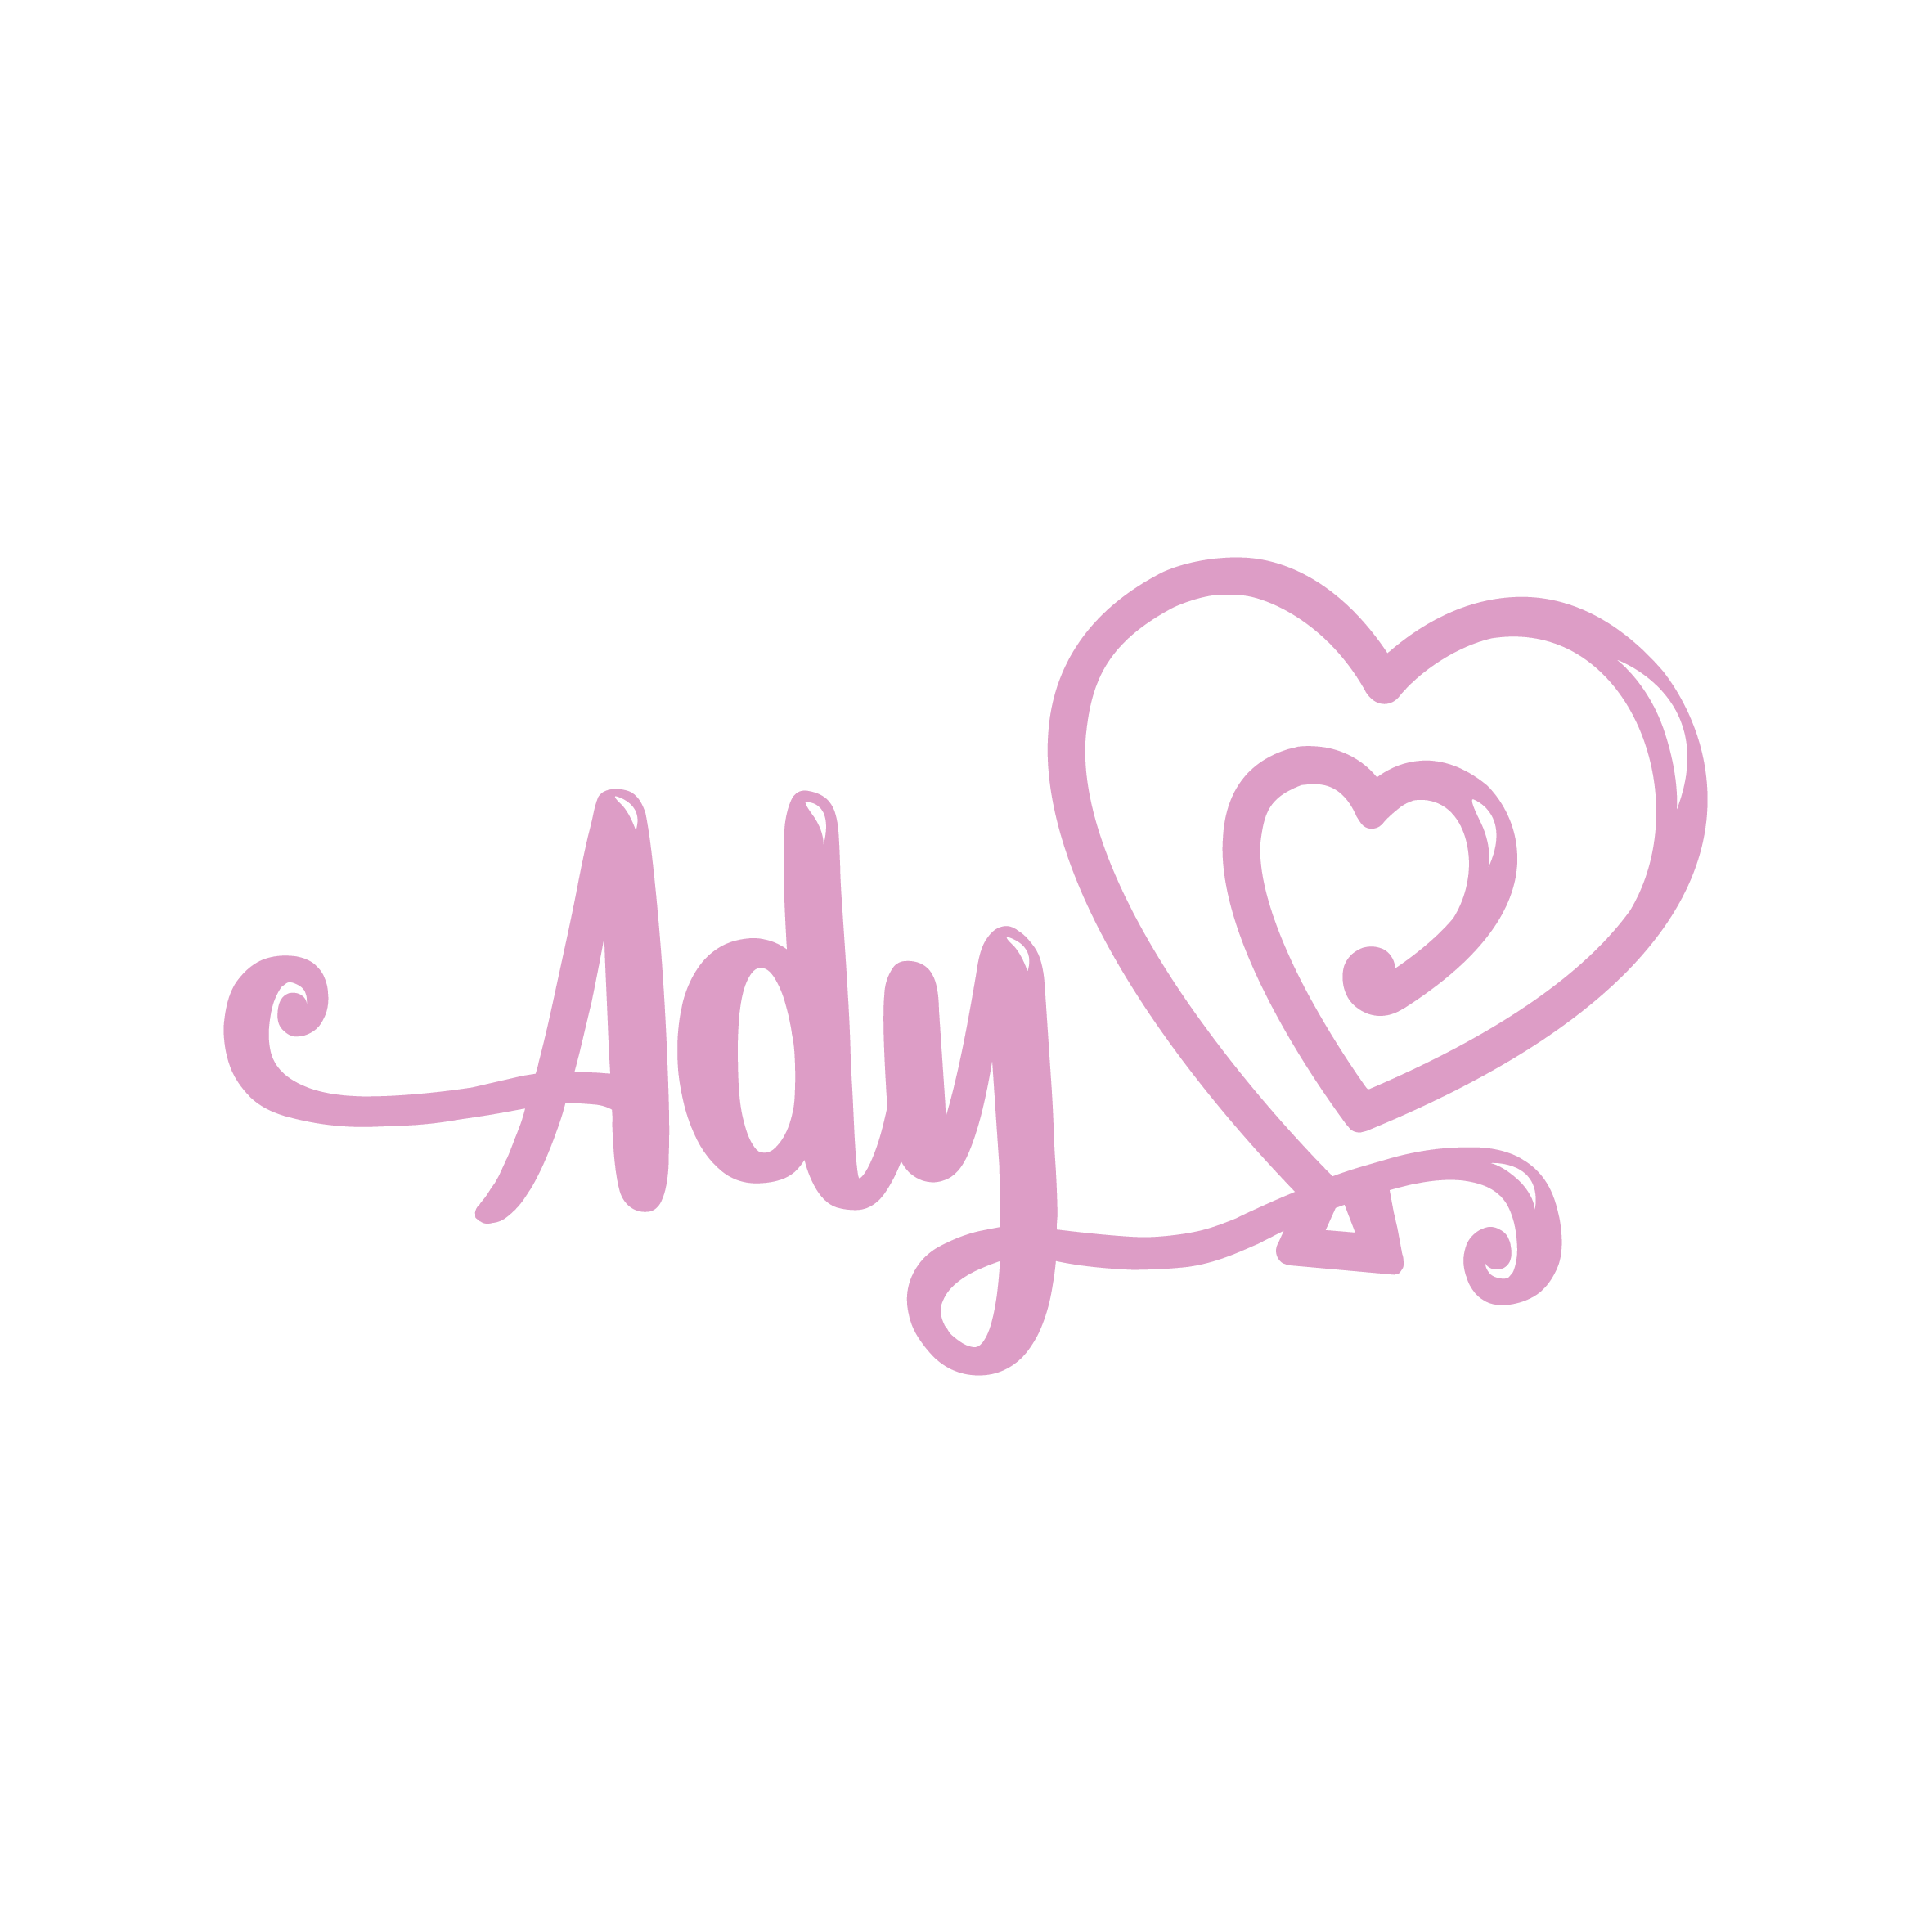 ady – Medium